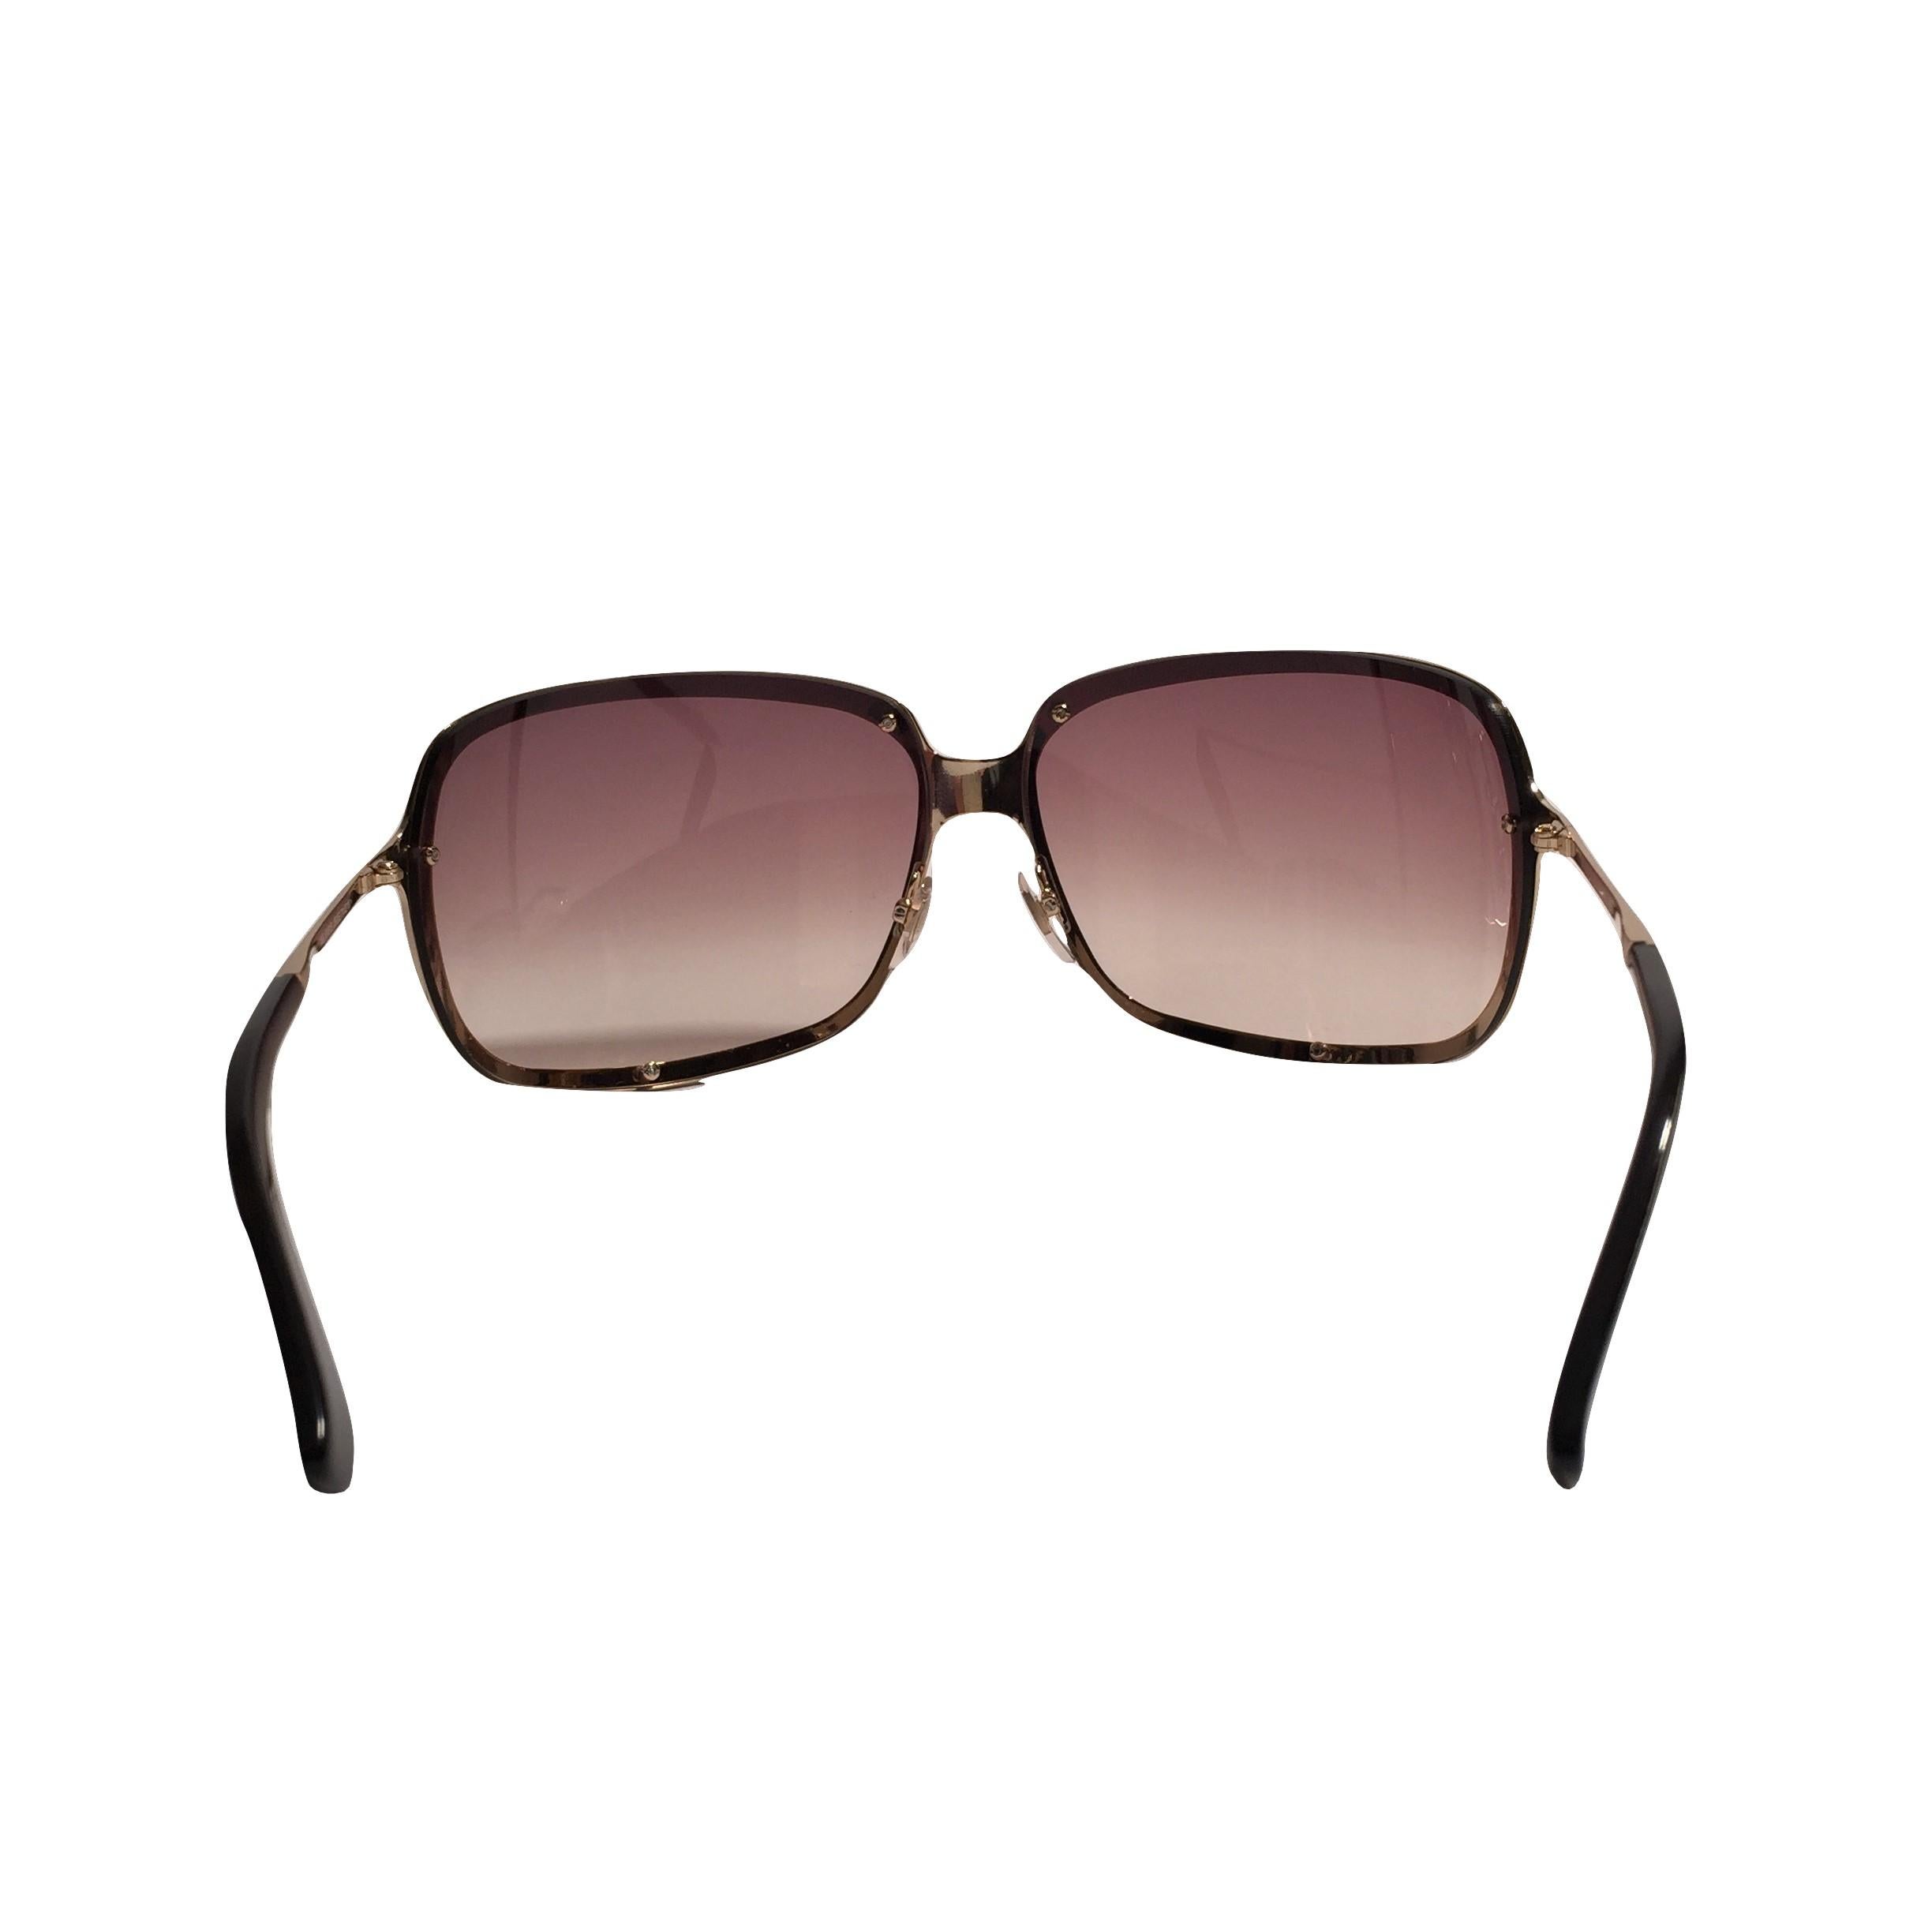 Yves Saint Laurent New YSL Gold Wrap Sunglasses  6